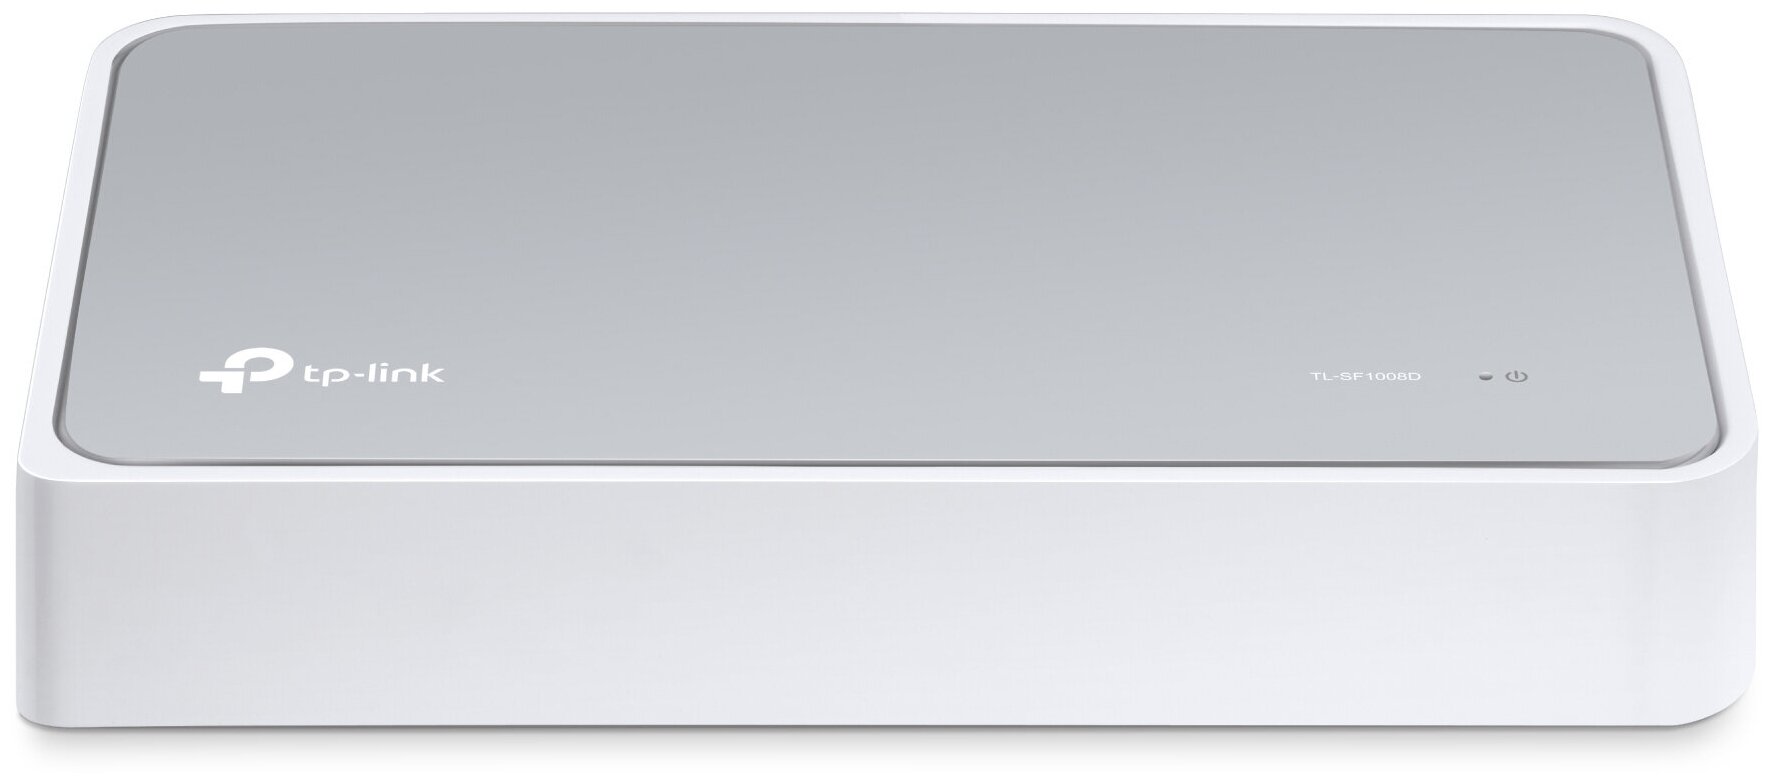 Коммутатор/ 8-port 10/100M mini Desktop Switch, 8 10/100M RJ45 ports, Plastic case